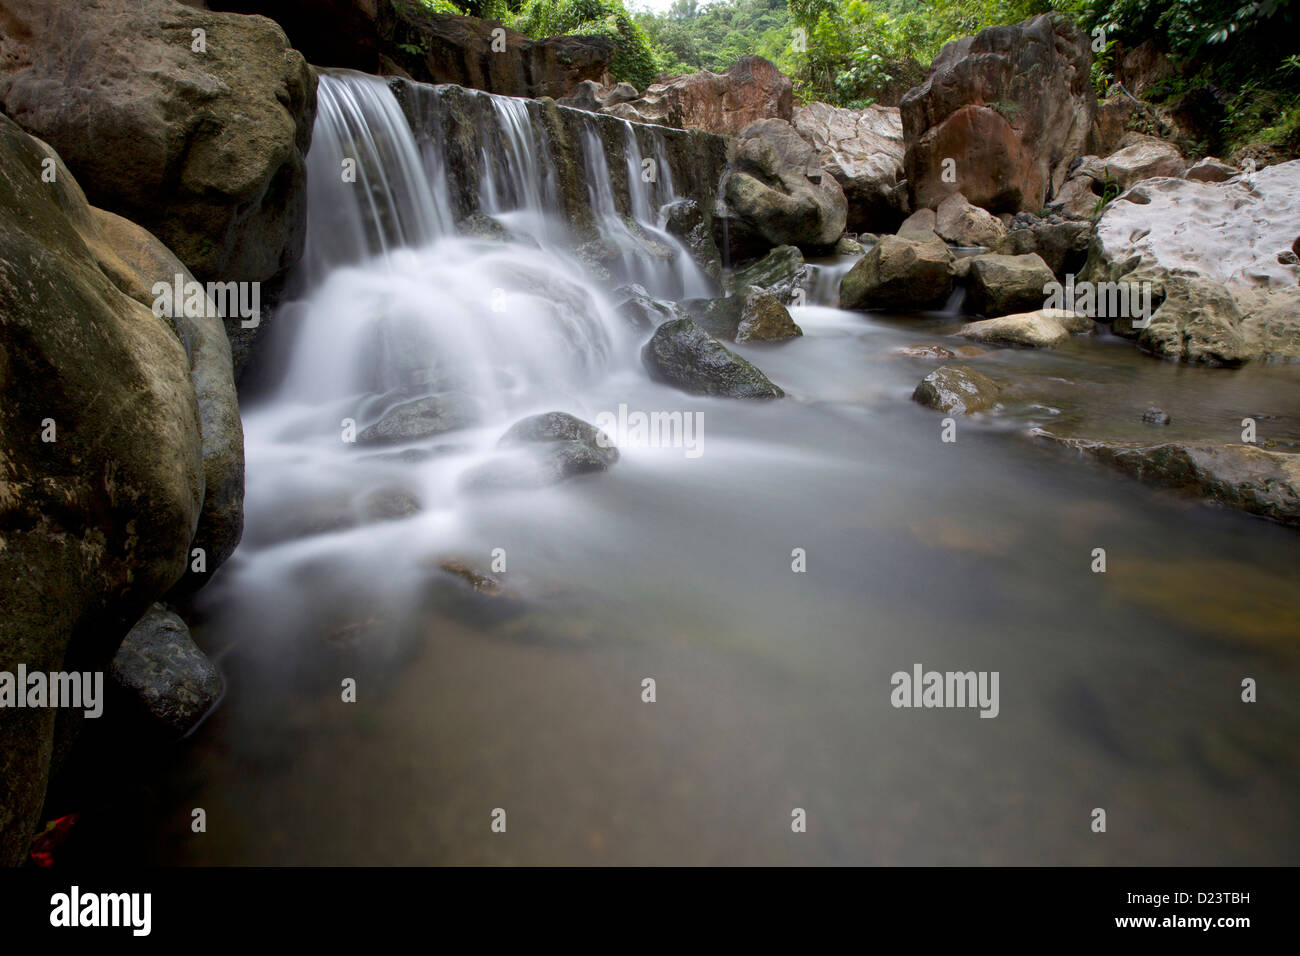 Waterfall,ND400 filter exposure,f16, 25secs, ASA 100 Stock Photo